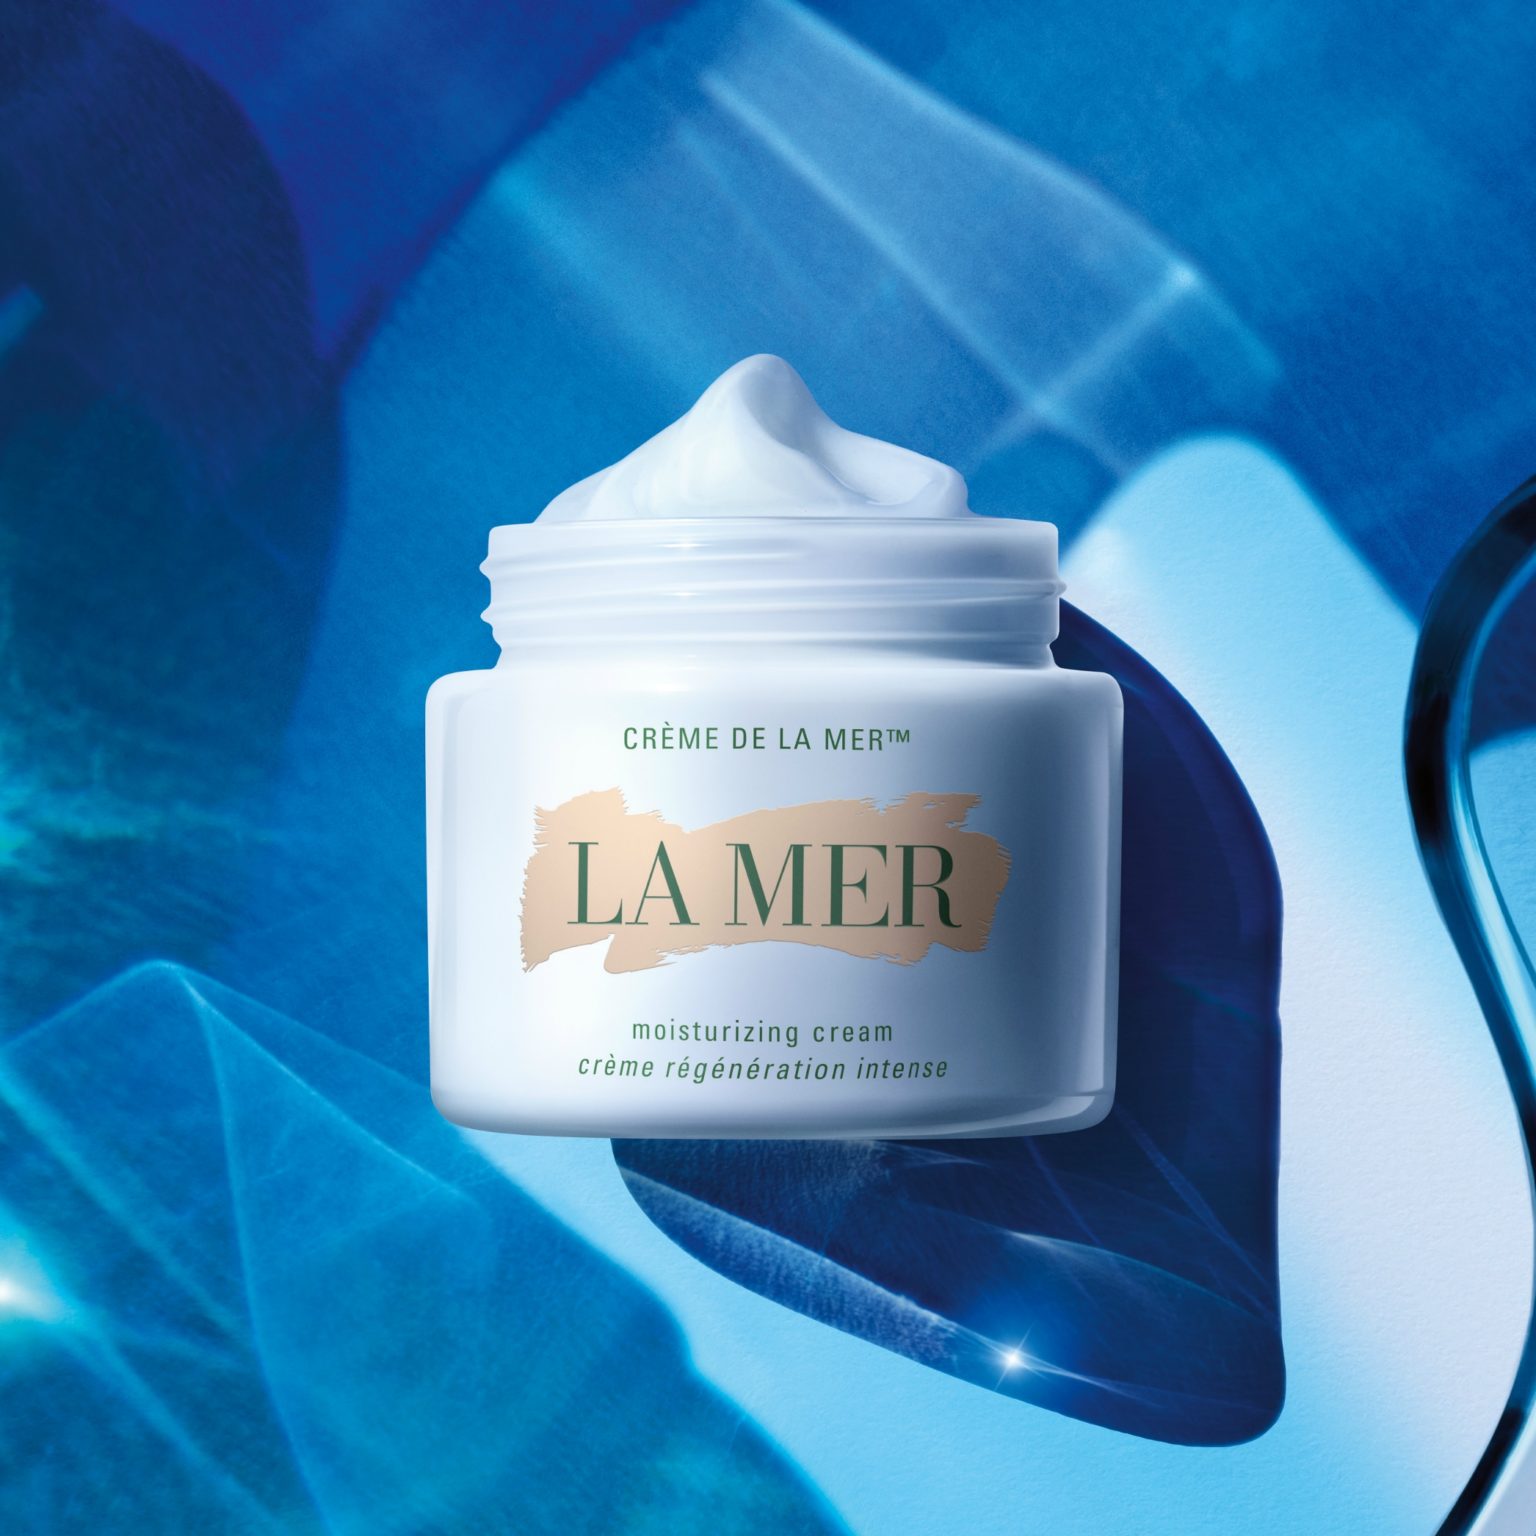 La Mer: a symbol of luxury - The Chic Icon